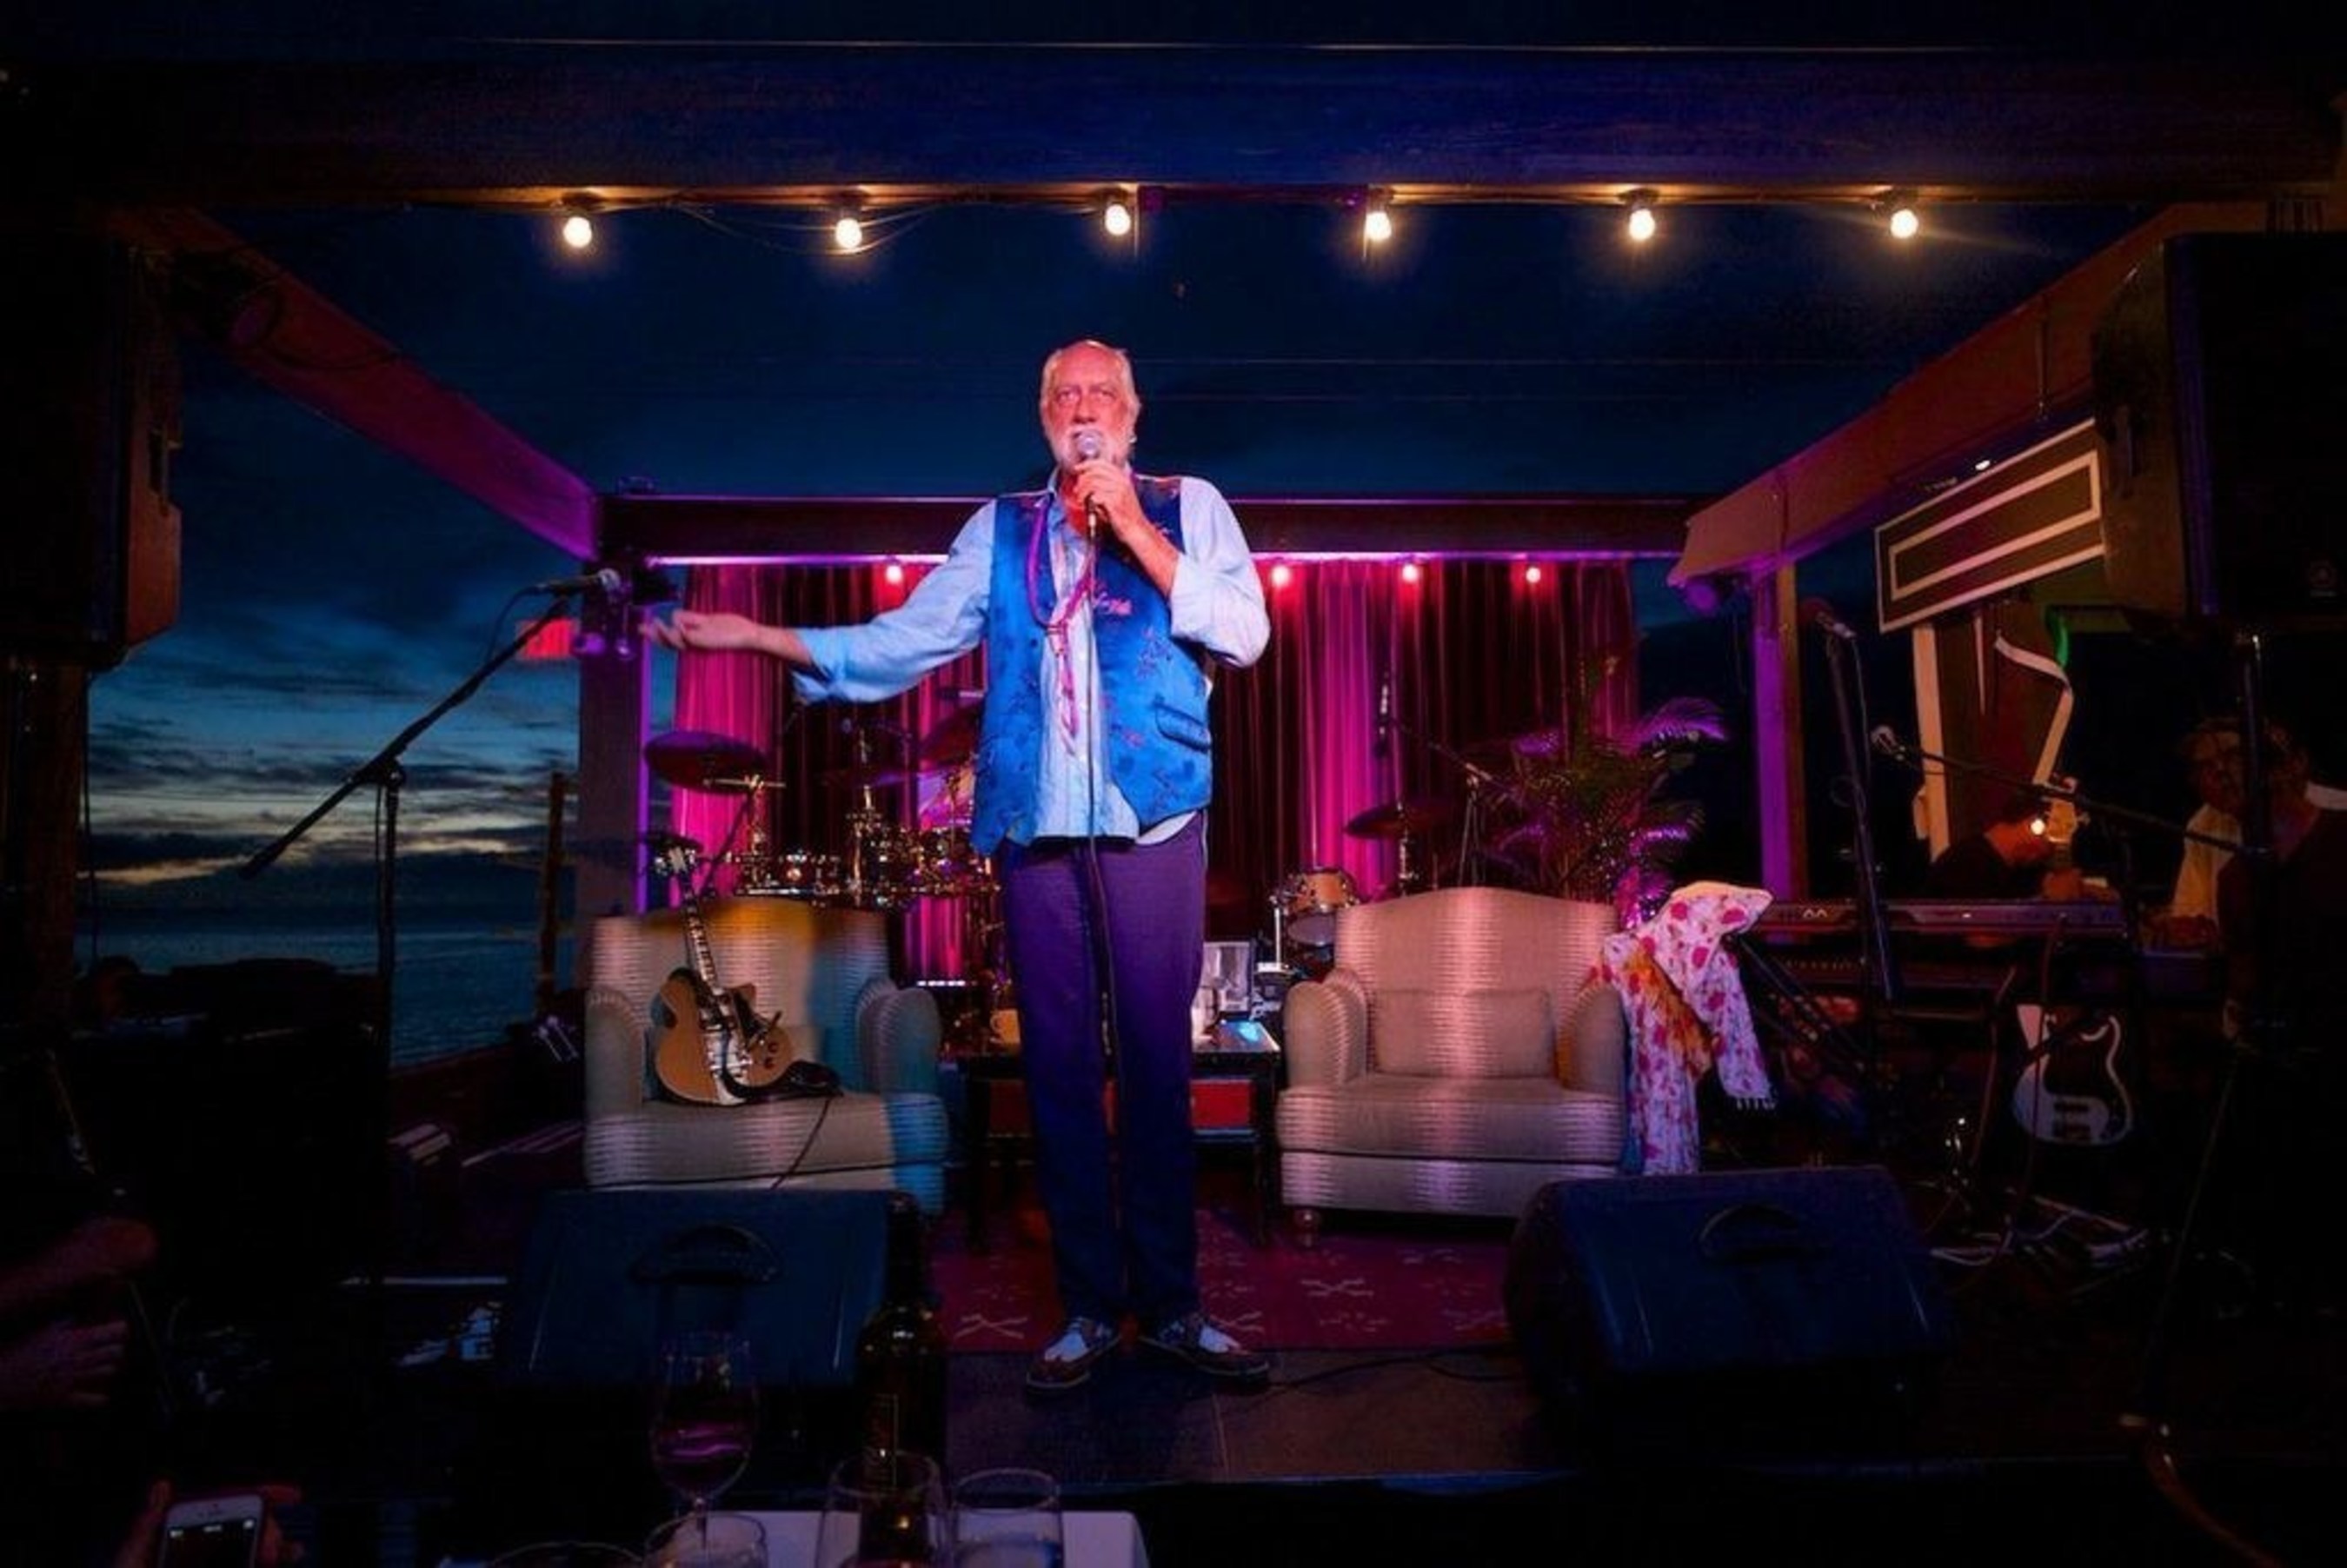 Mick Fleetwood of Fleetwood Mac Performs at His Maui Restaurant Fleetwood's on Front St.